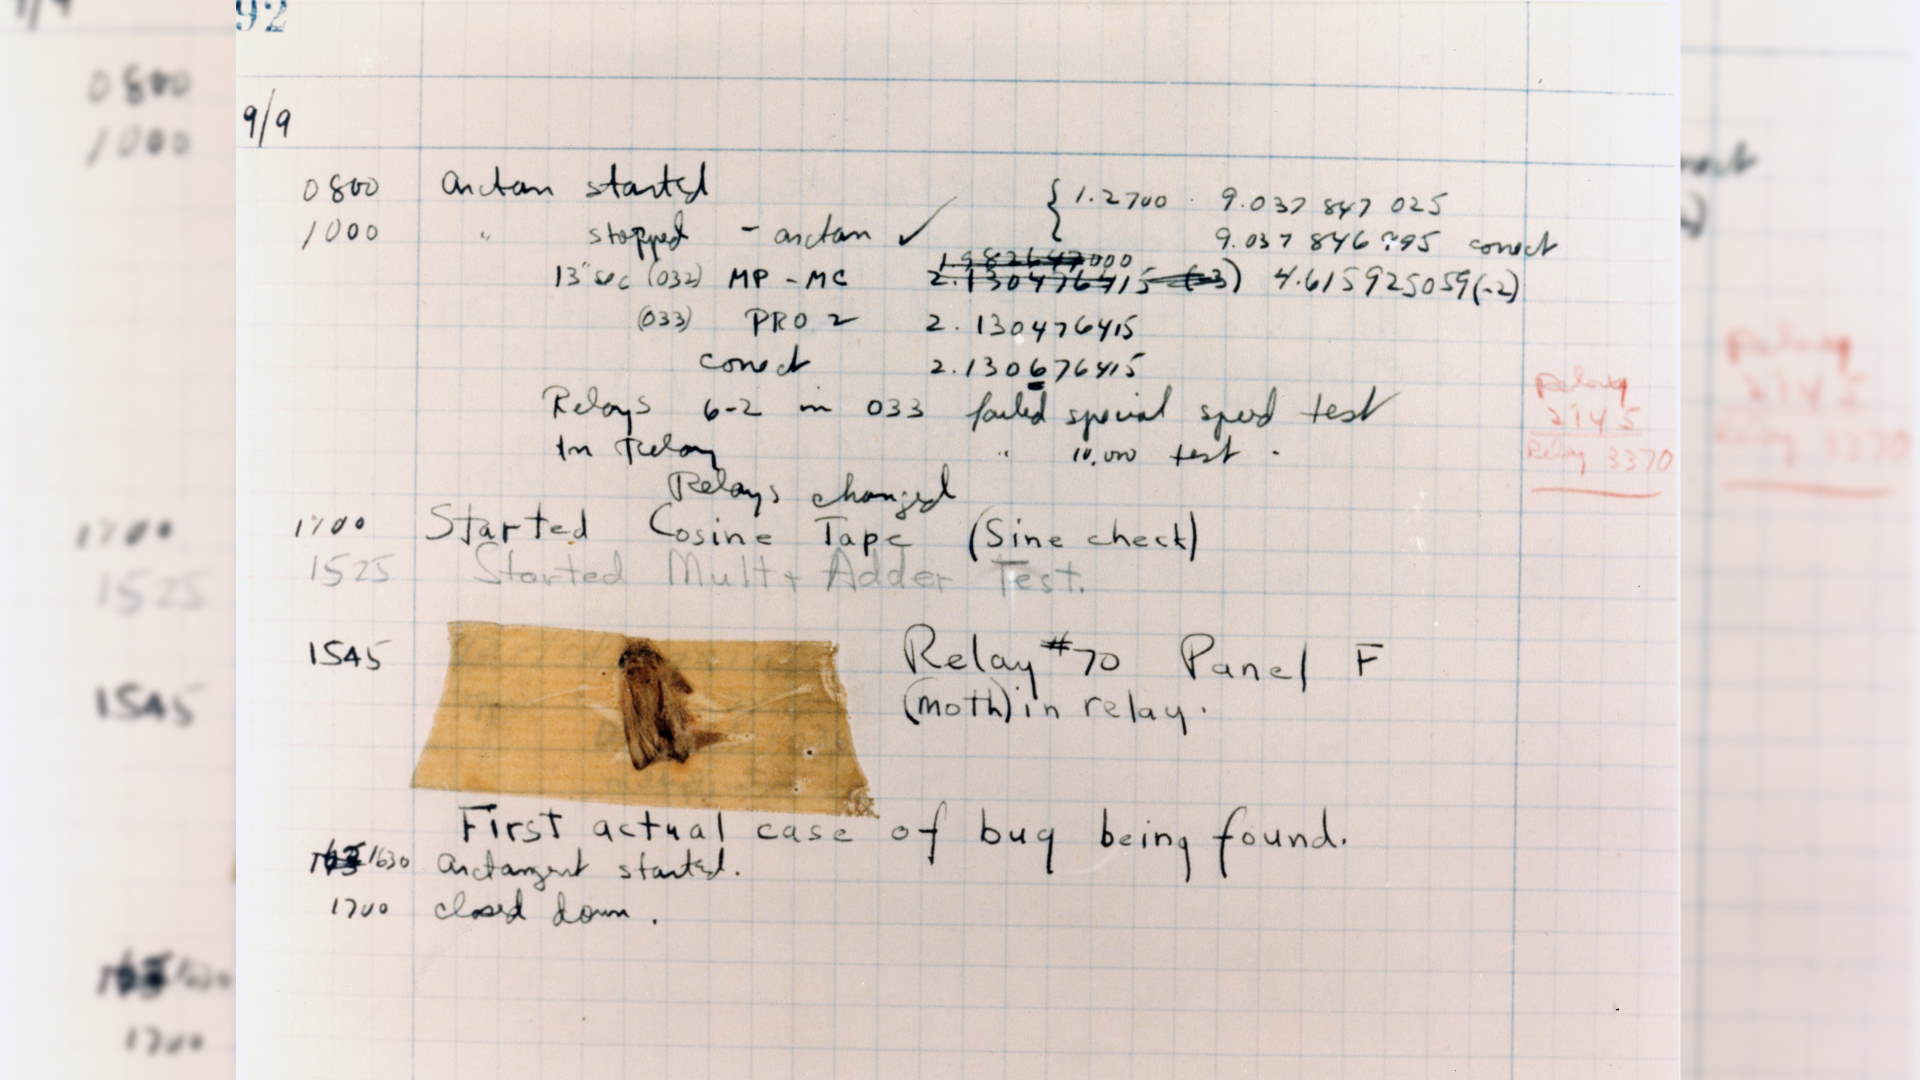 Log book detailing bug in the Harvard Mark II computer